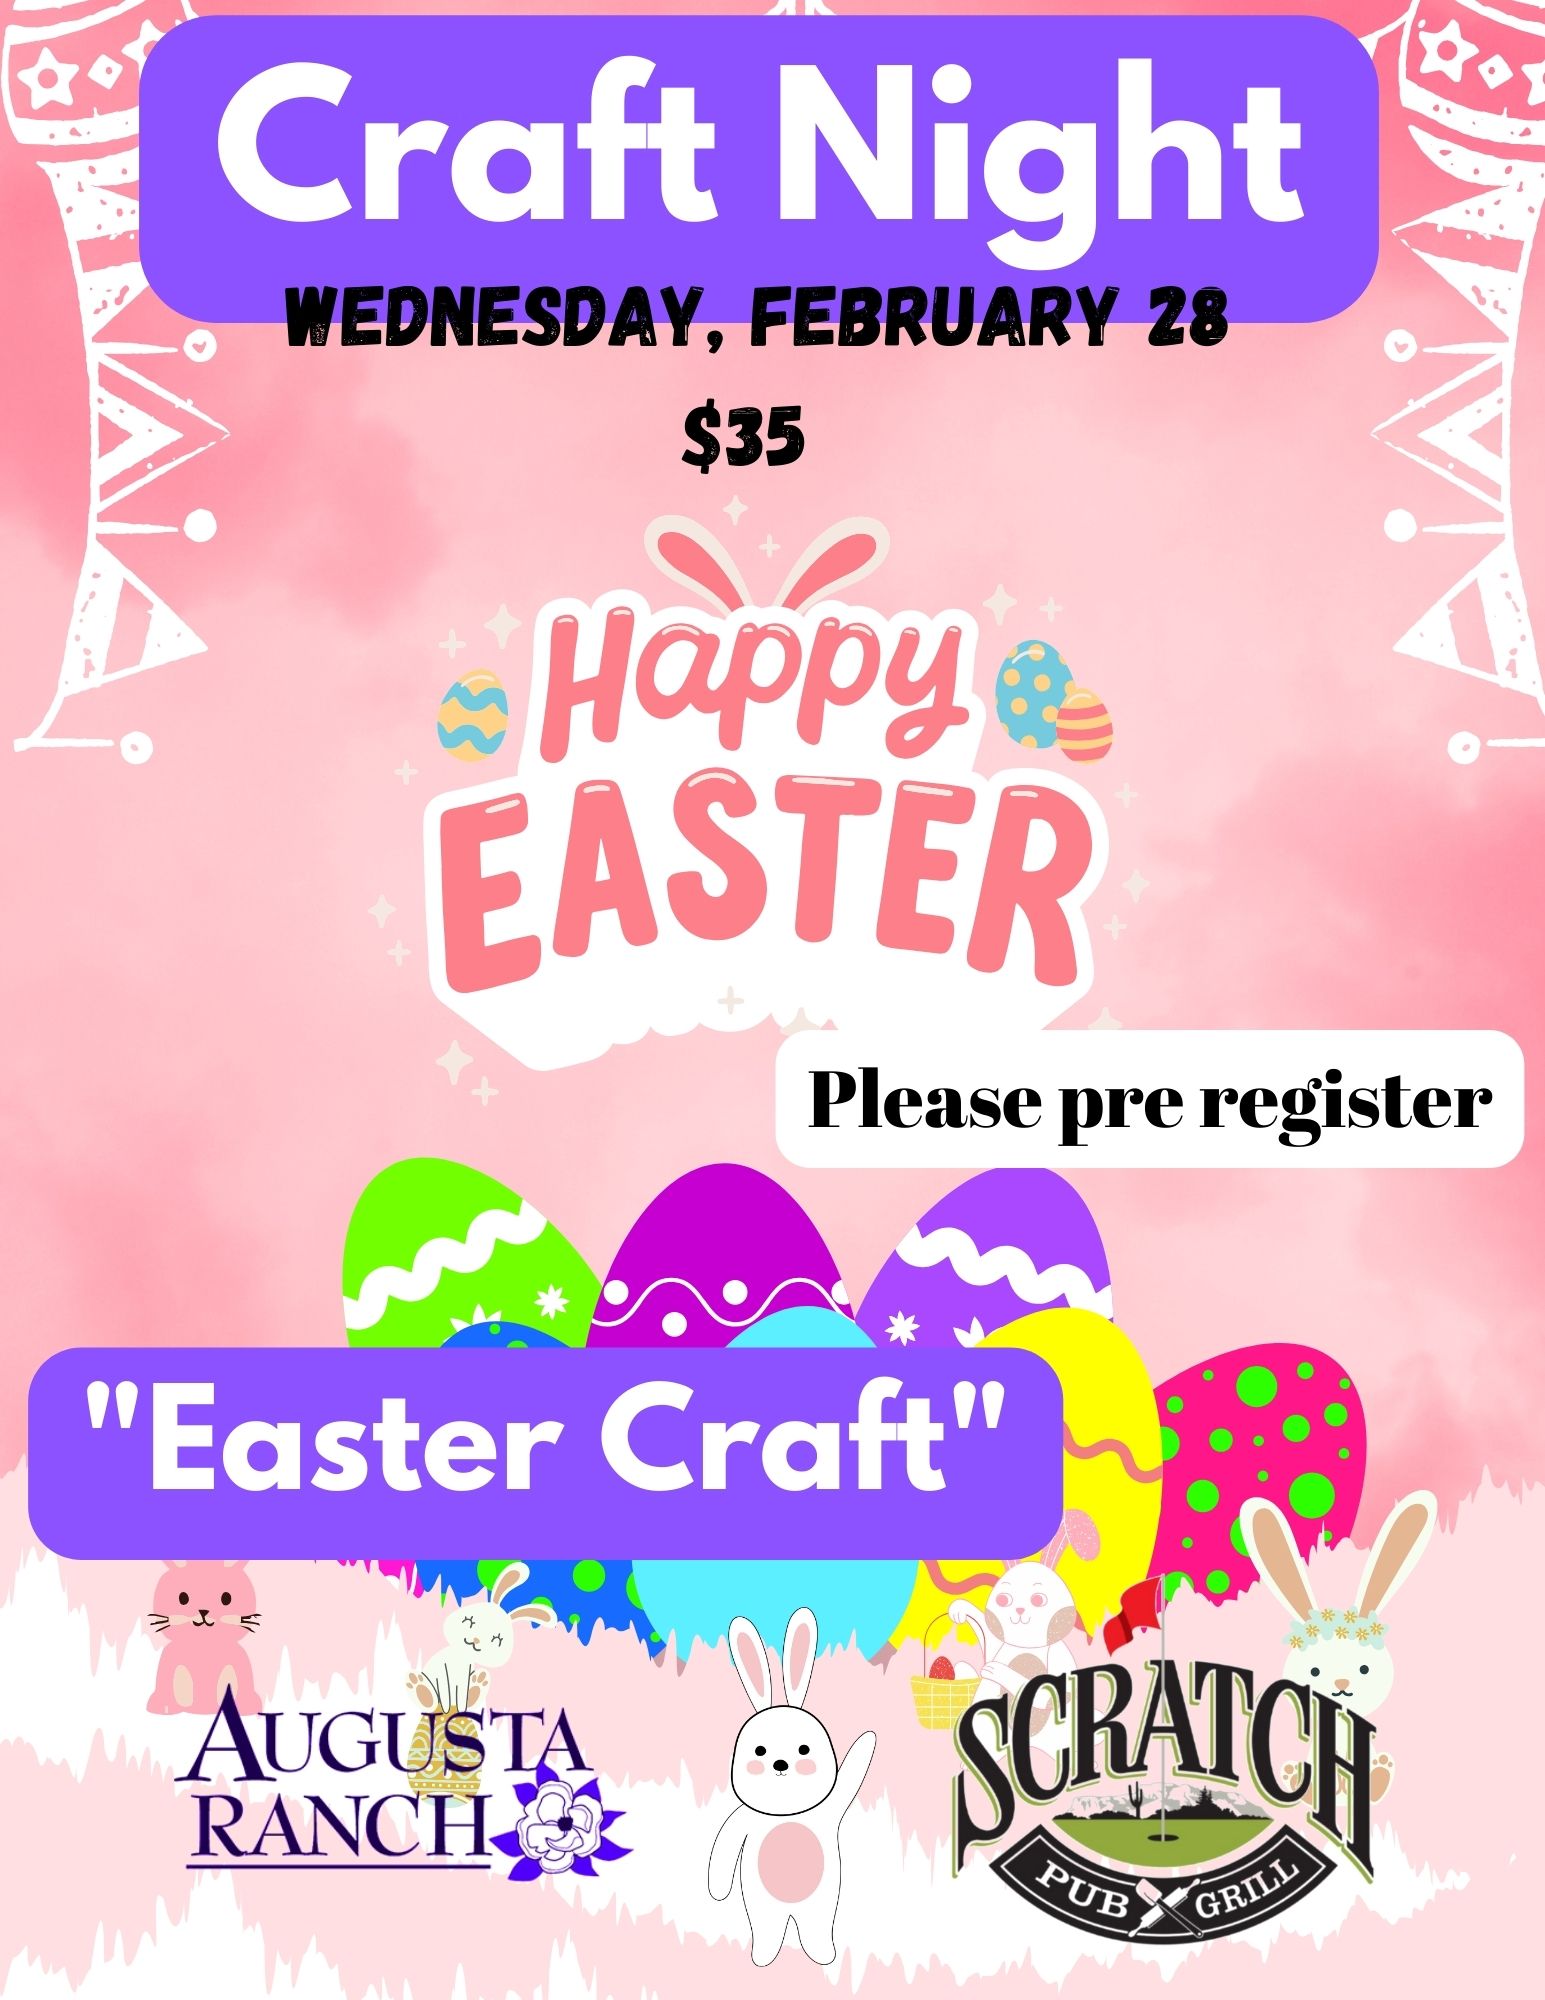 Craft Night "Easter Craft" in Mesa AZ 